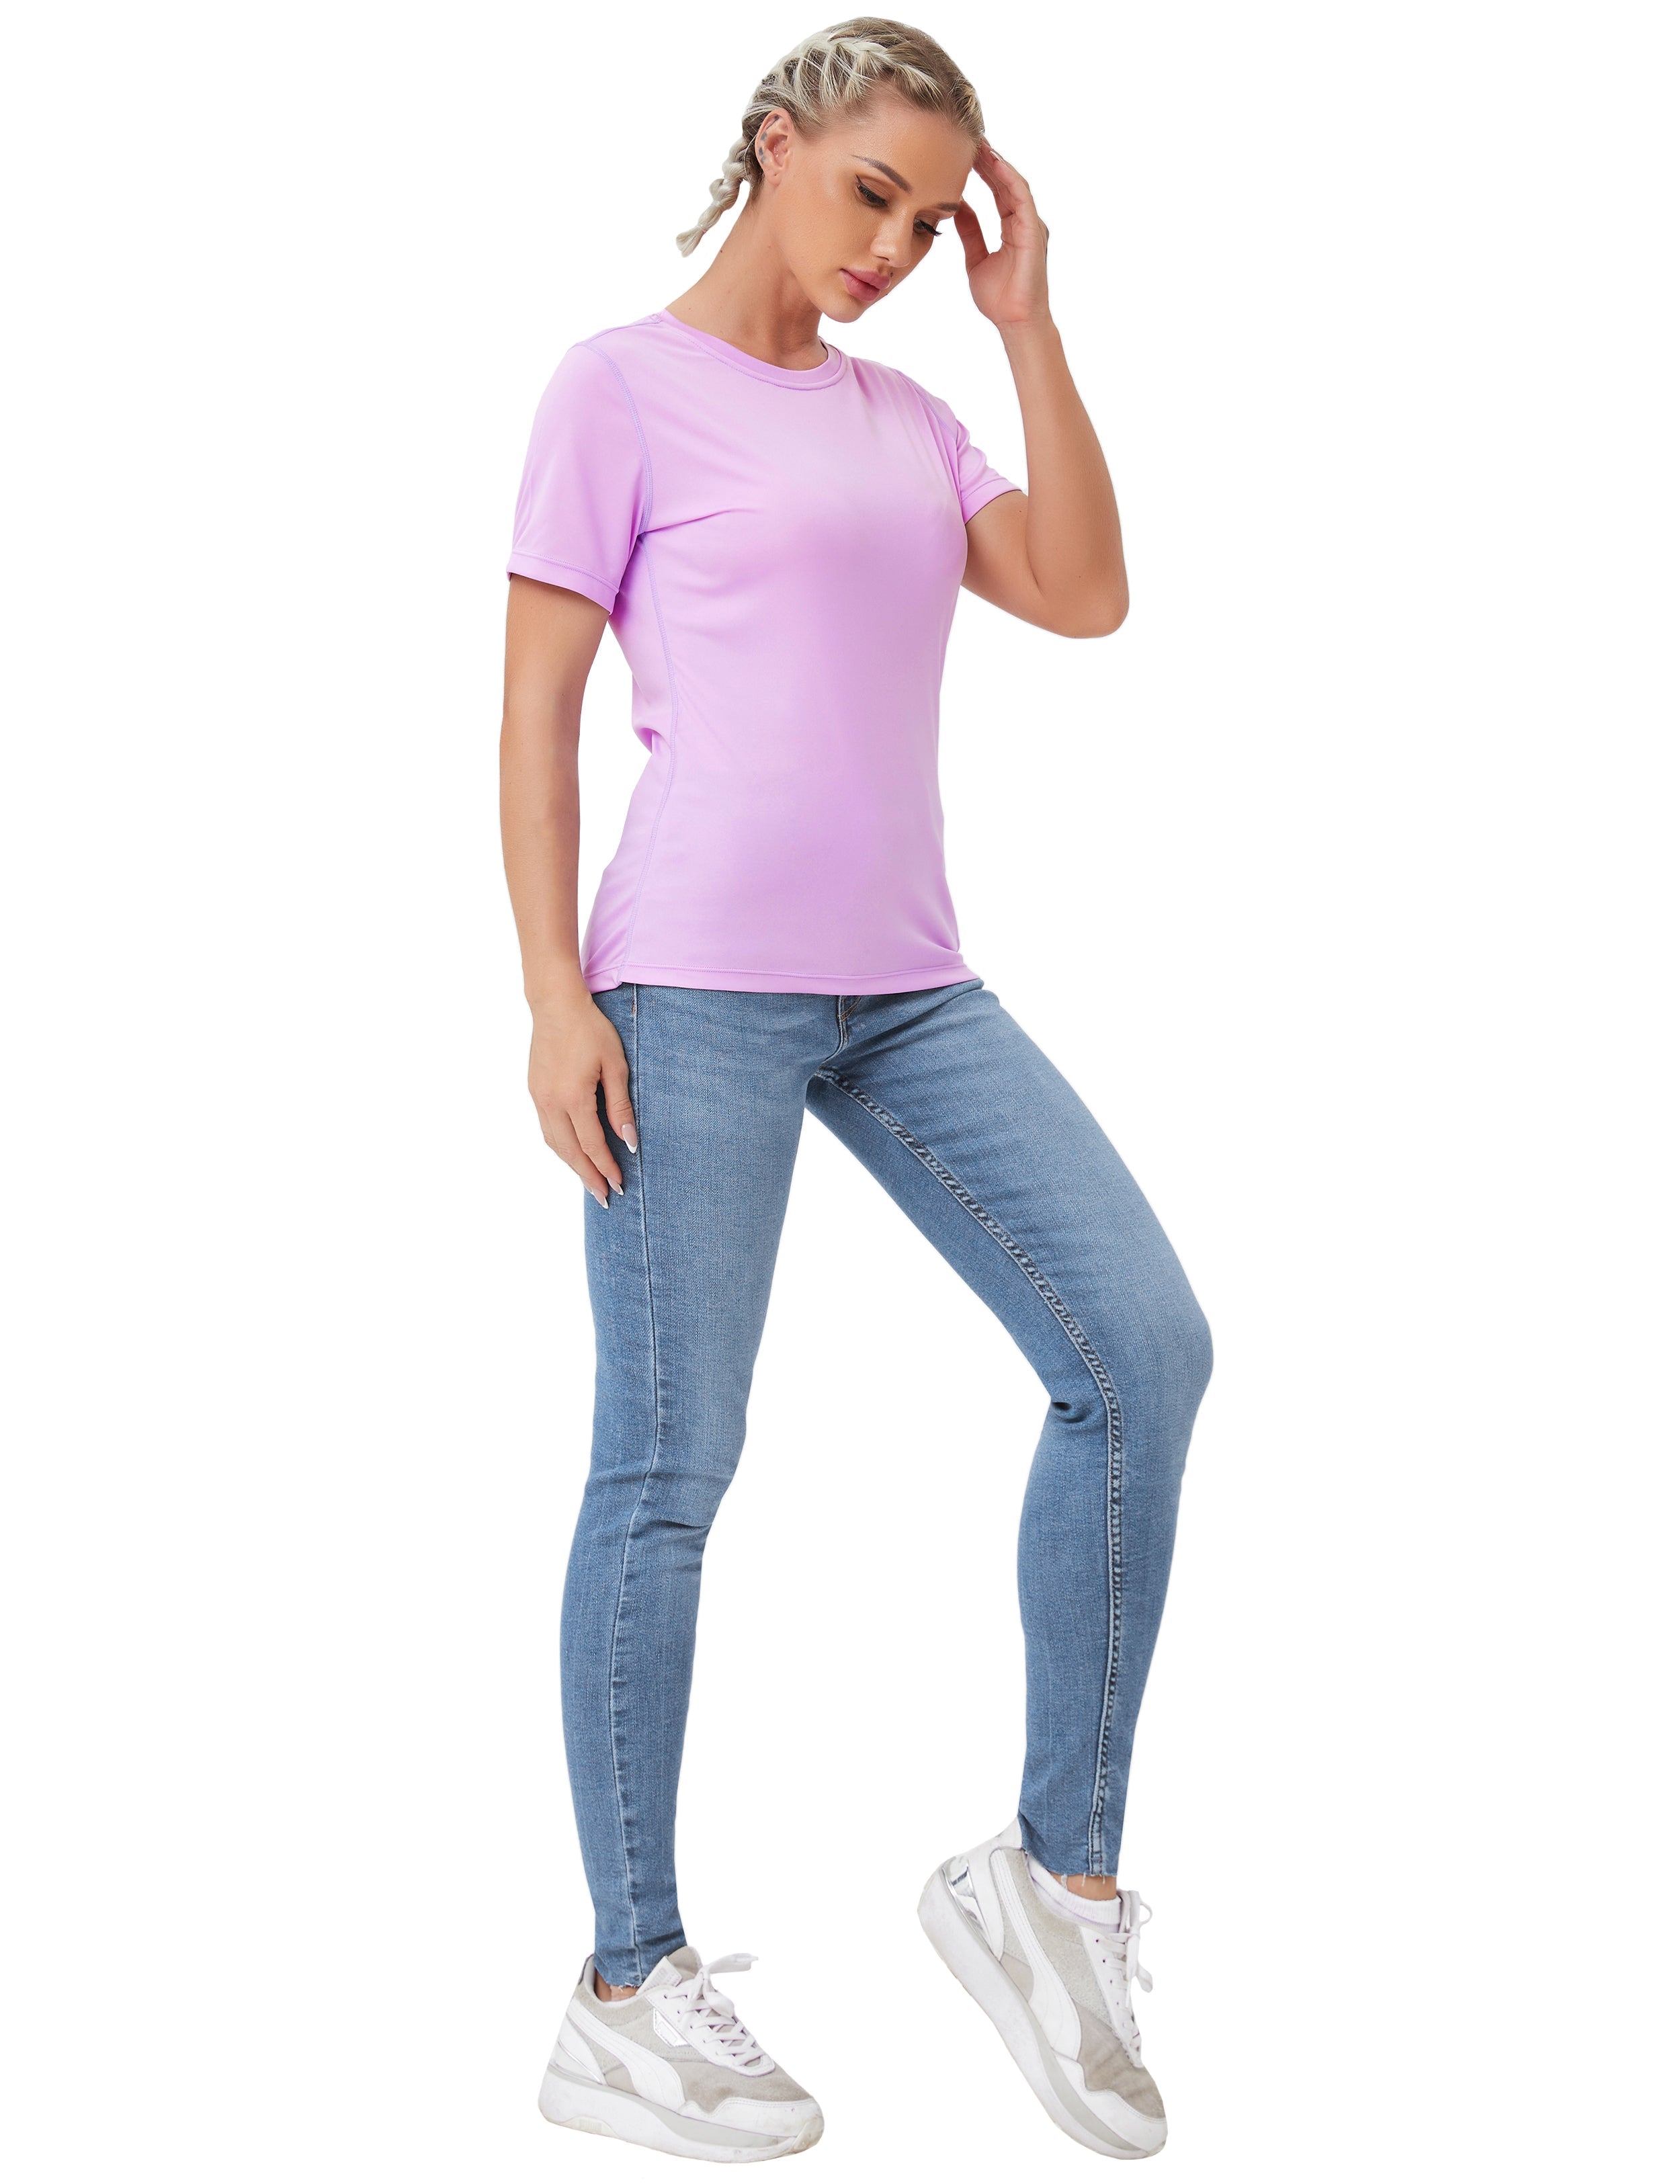 Short Sleeve Athletic Shirts purple_Golf